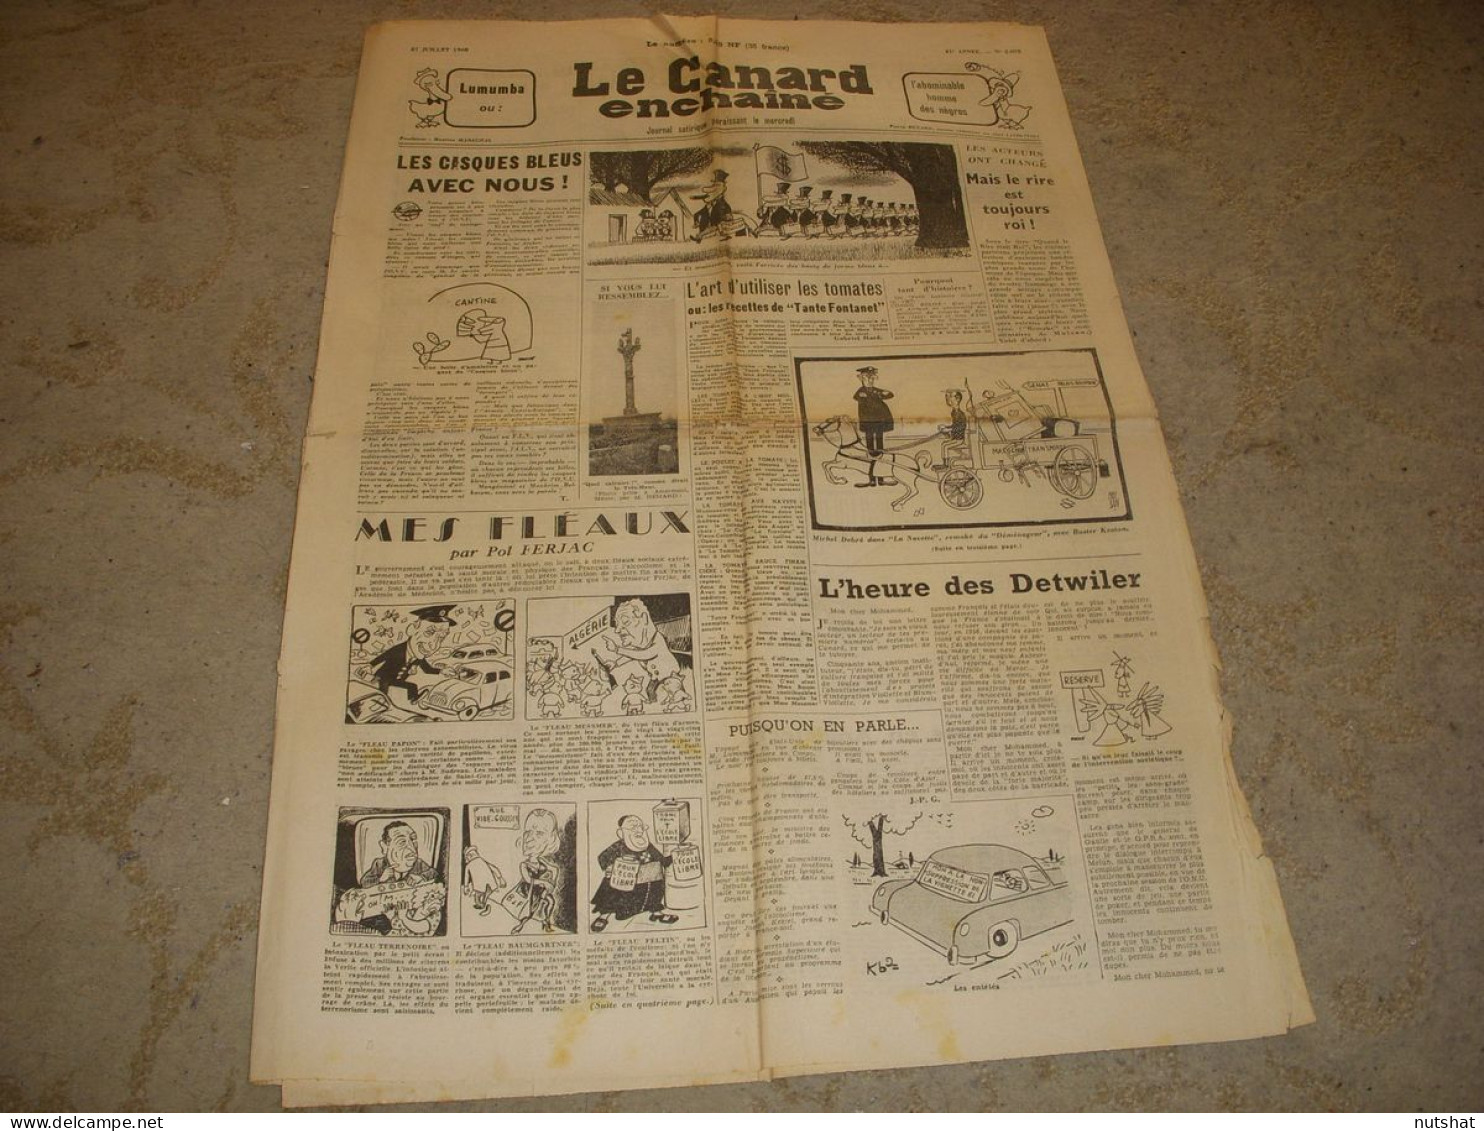 CANARD ENCHAINE 2075 27.07.1960 Hector MURO Dit SAKI Jacques PEUCHMAURD - Politica